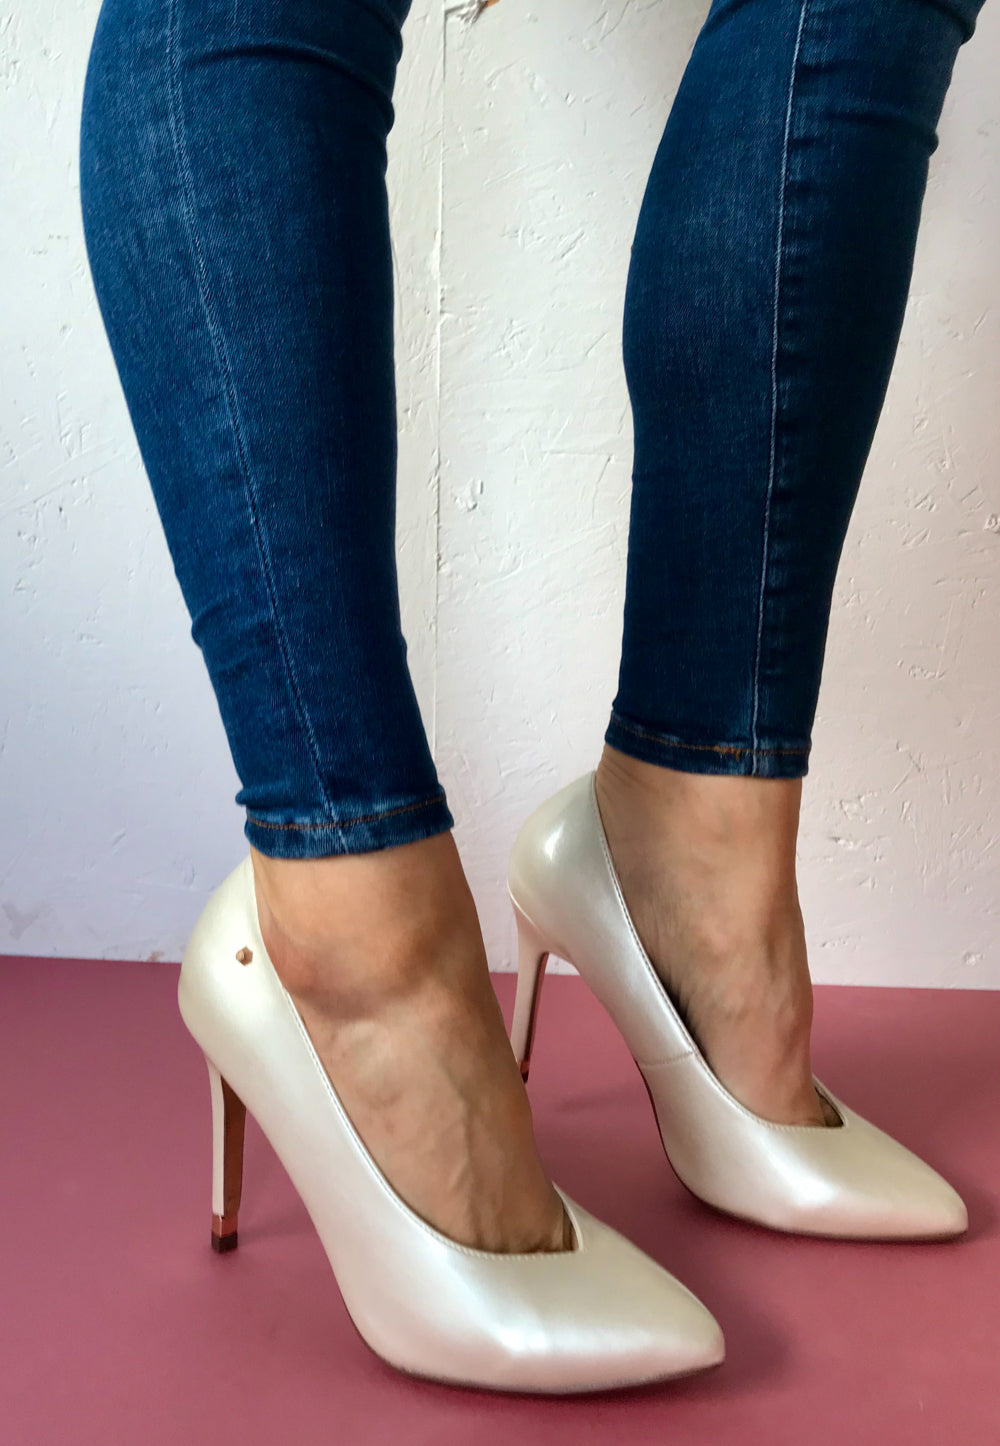 shop KATE APPLEBY heels Monmore 